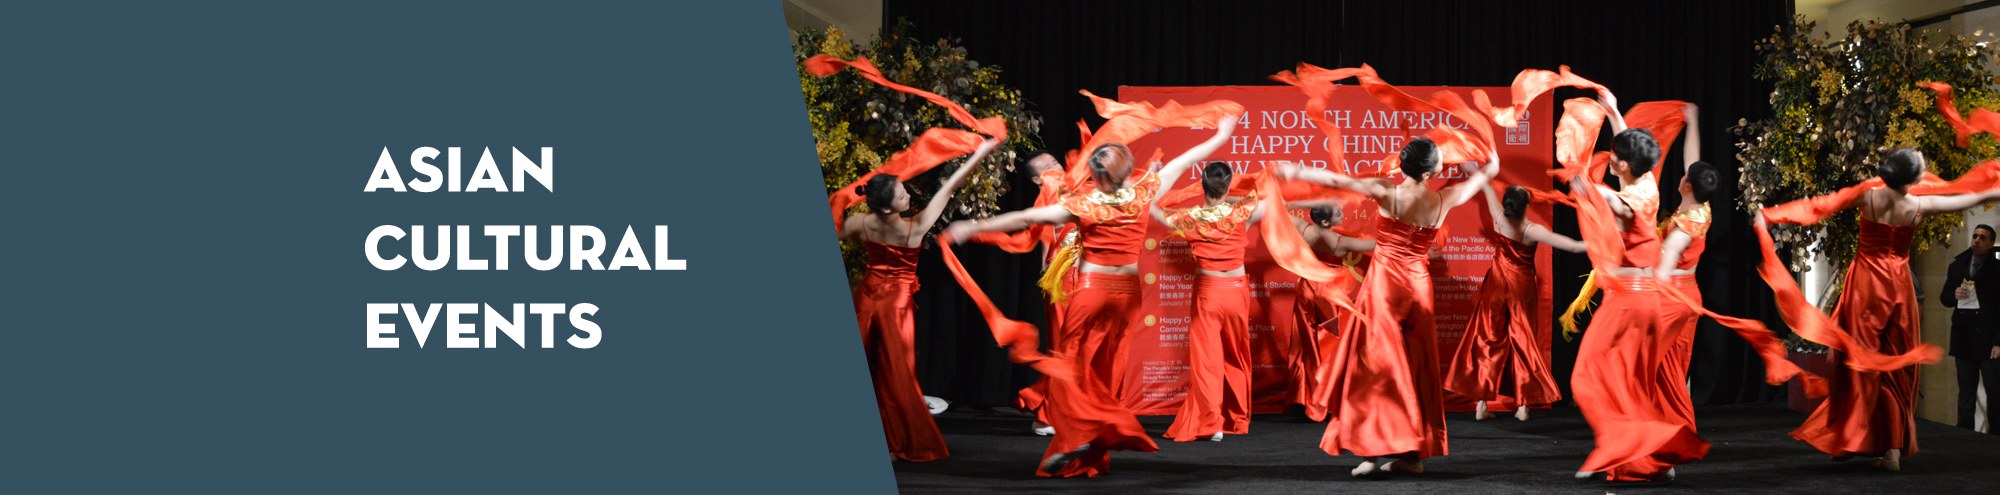 Asian Cultural Events in Costa Mesa